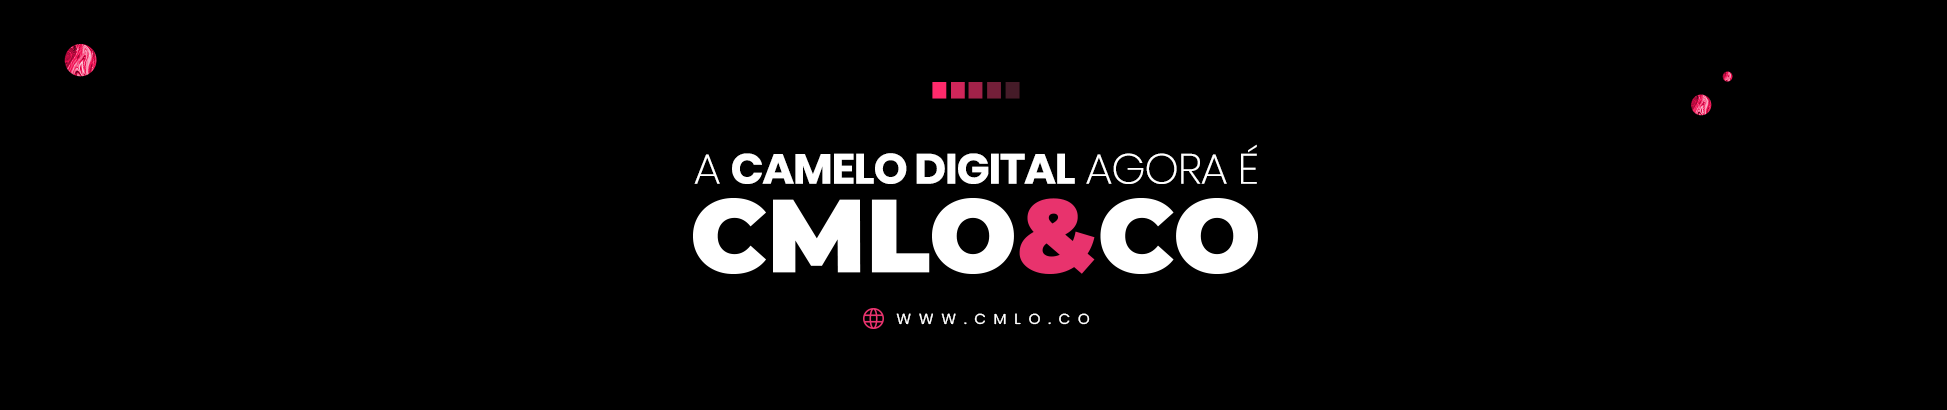 CMLO &CO's profile banner